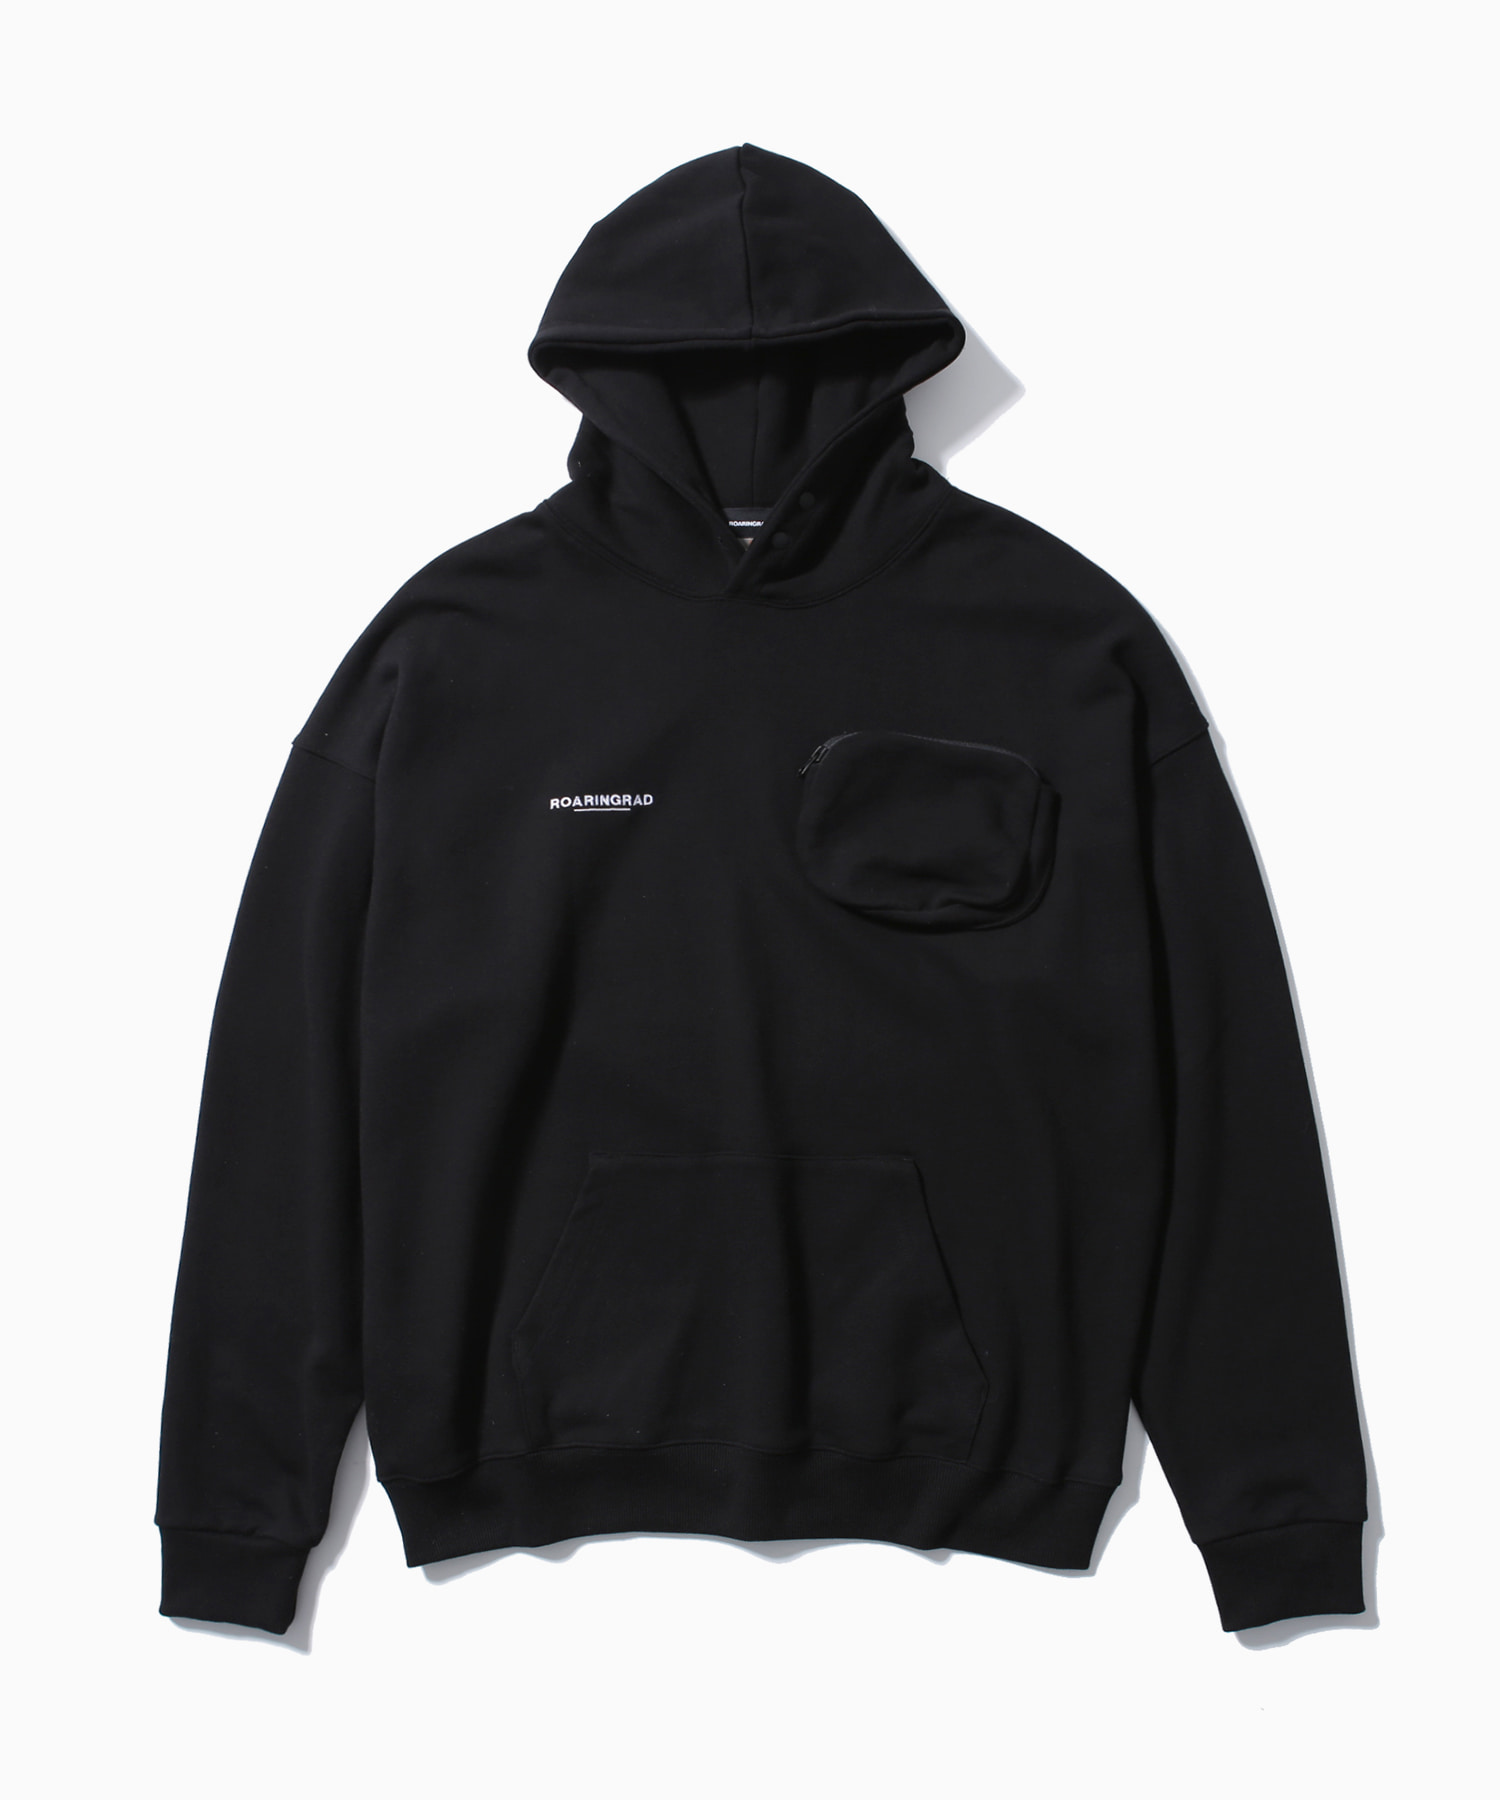 pocket over sweat hoodie black - 로어링라드(ROARINGRAD)